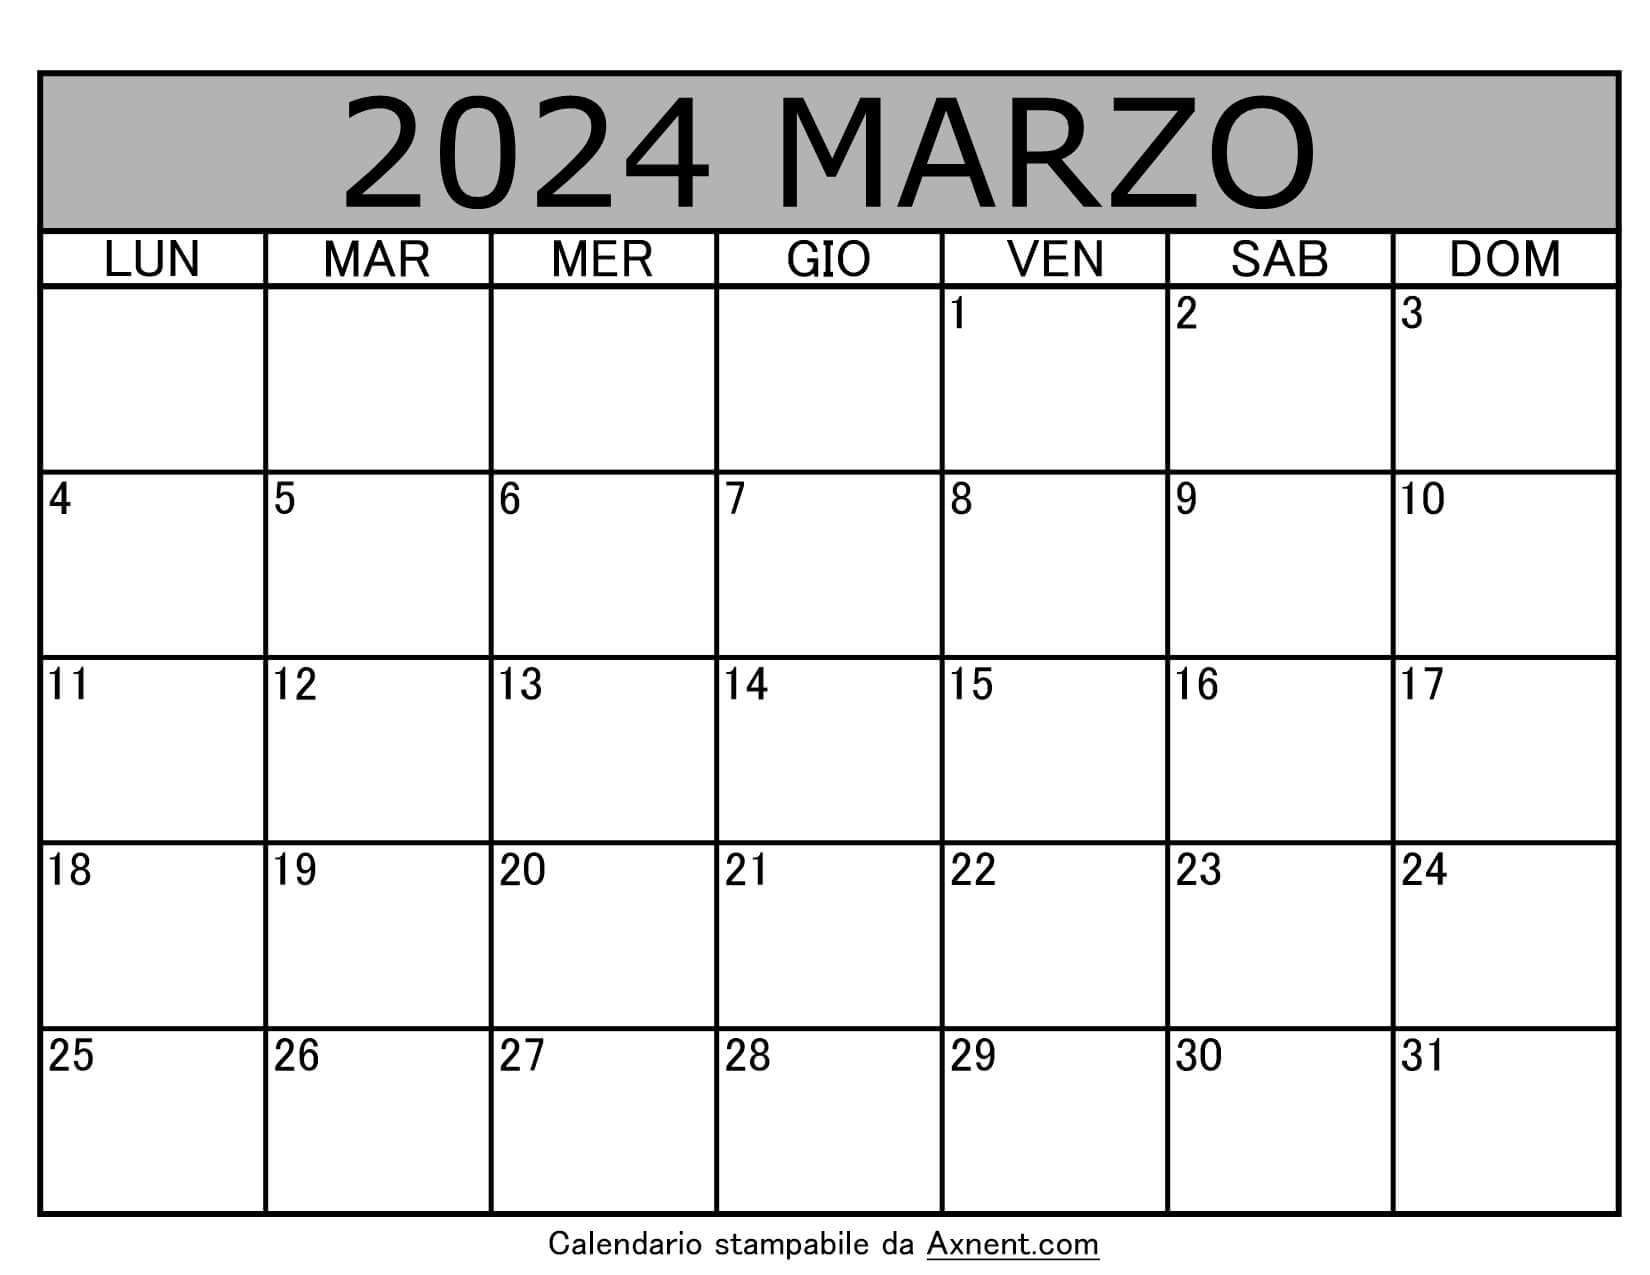 Calendario Mensile di Marzo 2024